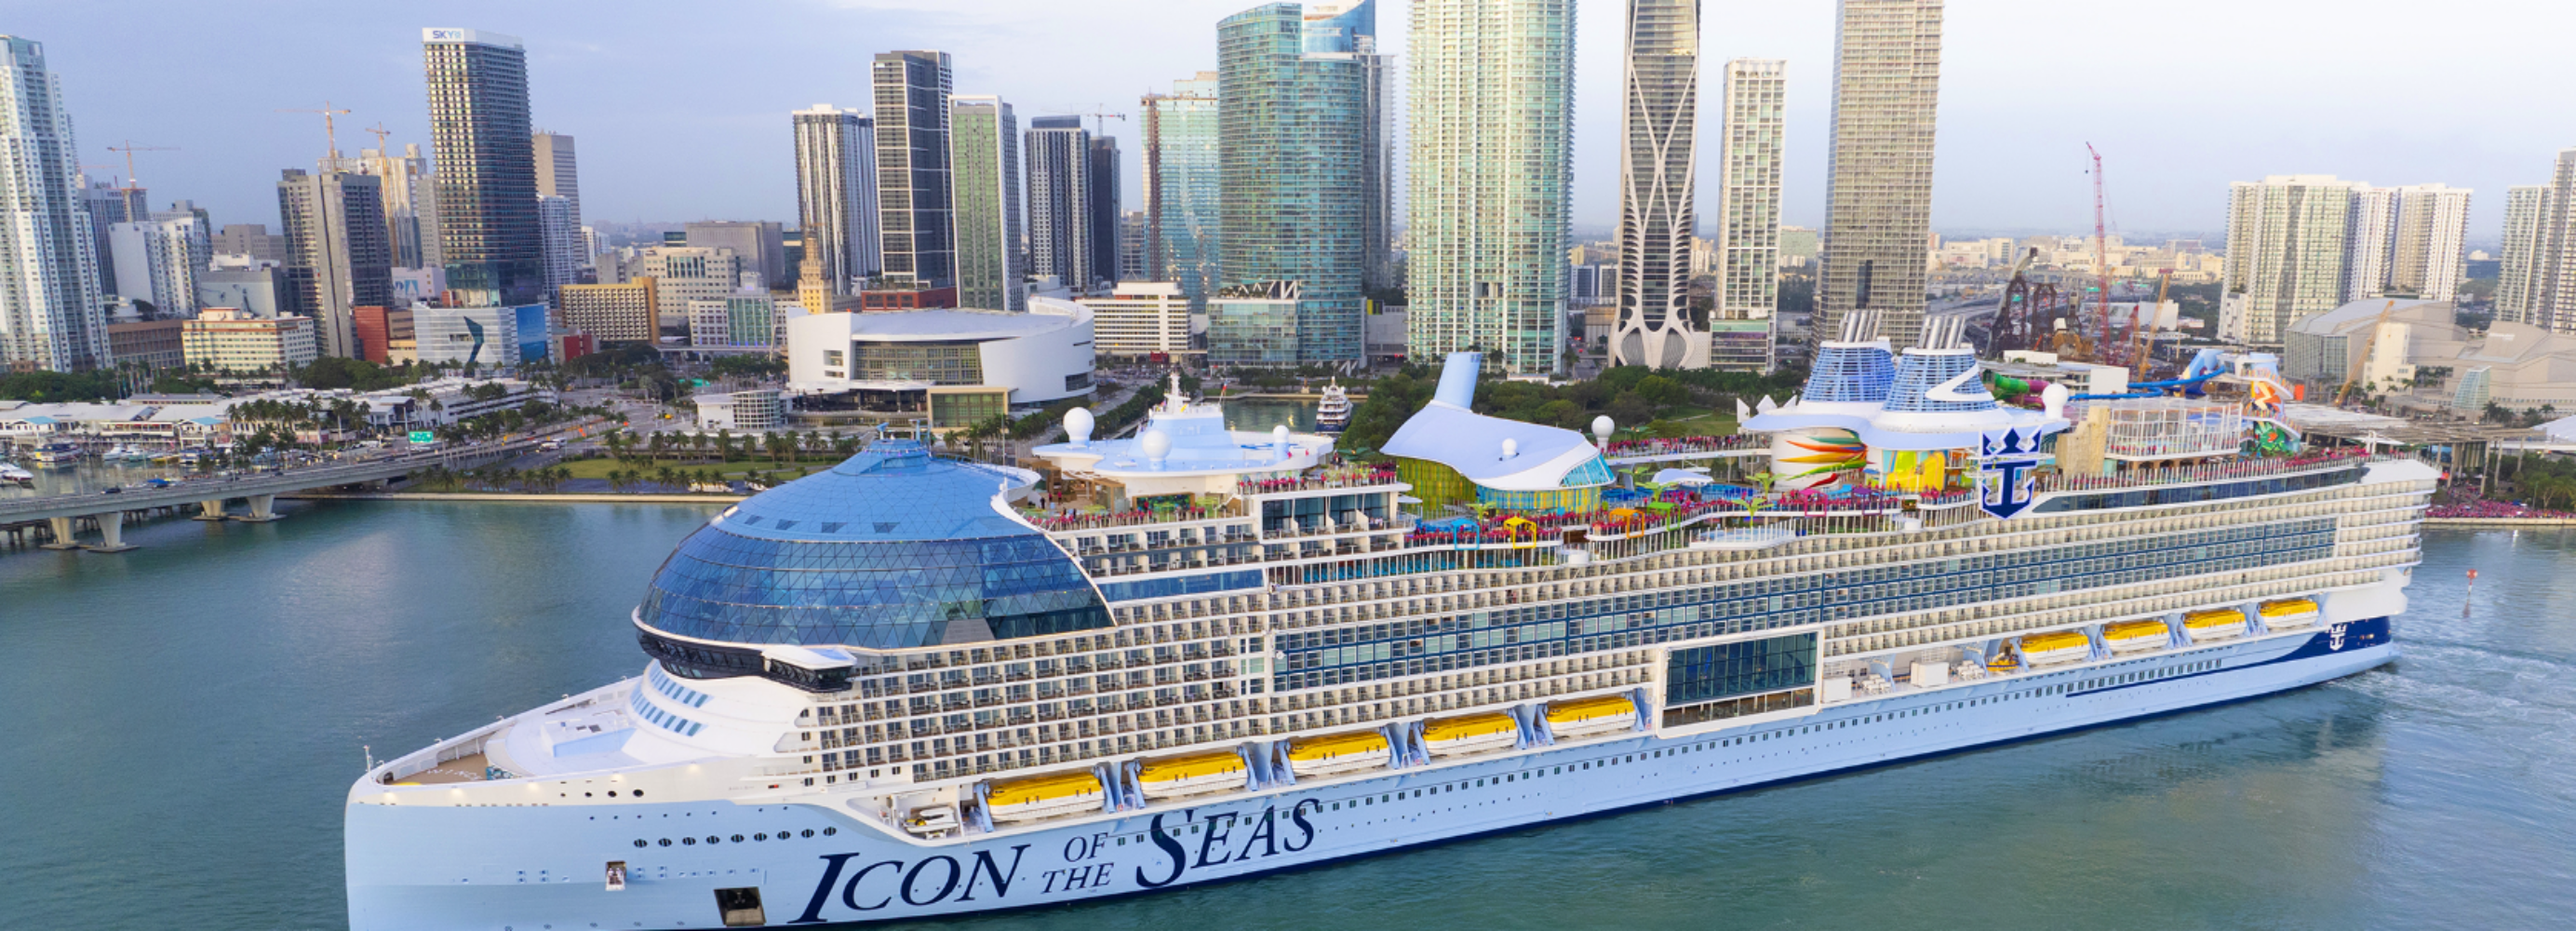 Royal Caribbean's Icon of the Seas sails into Miami